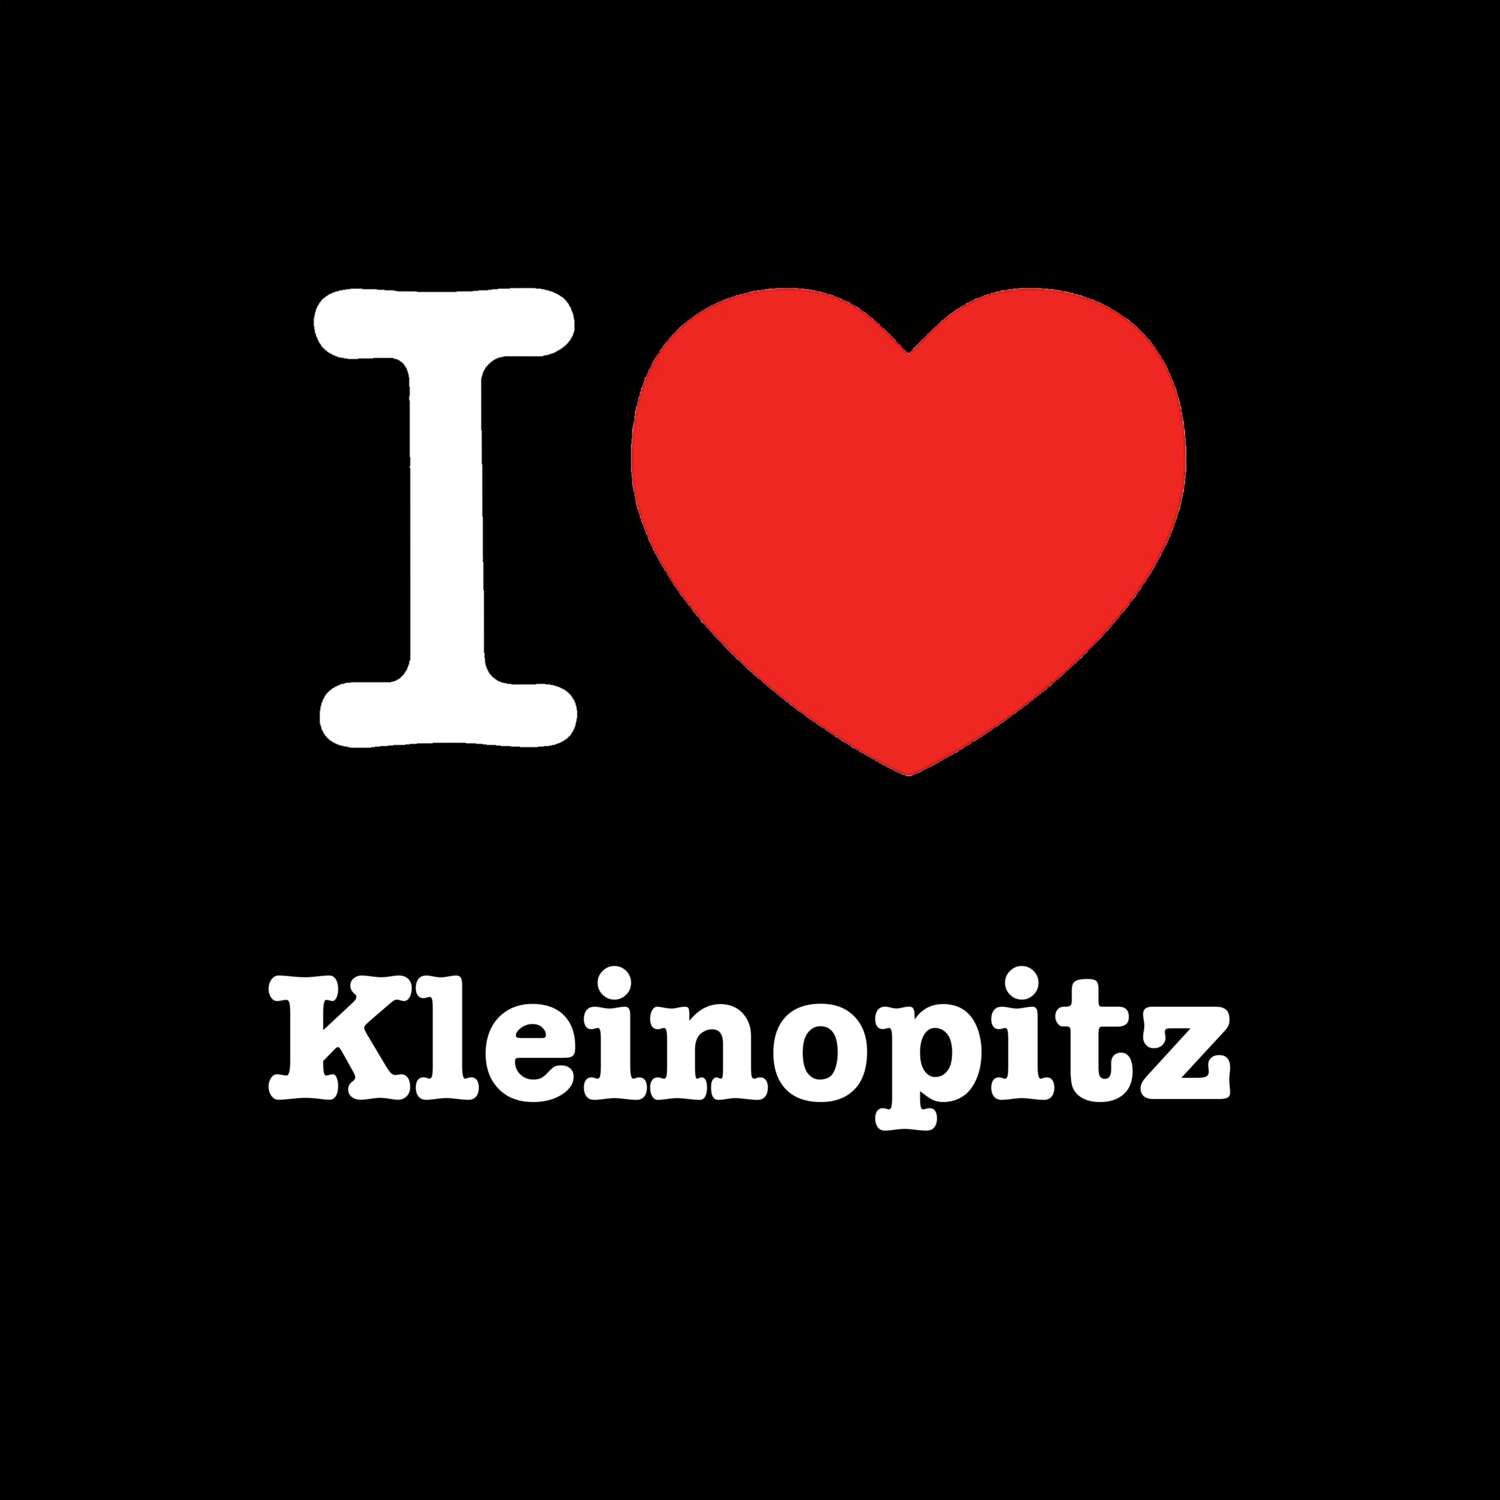 Kleinopitz T-Shirt »I love«